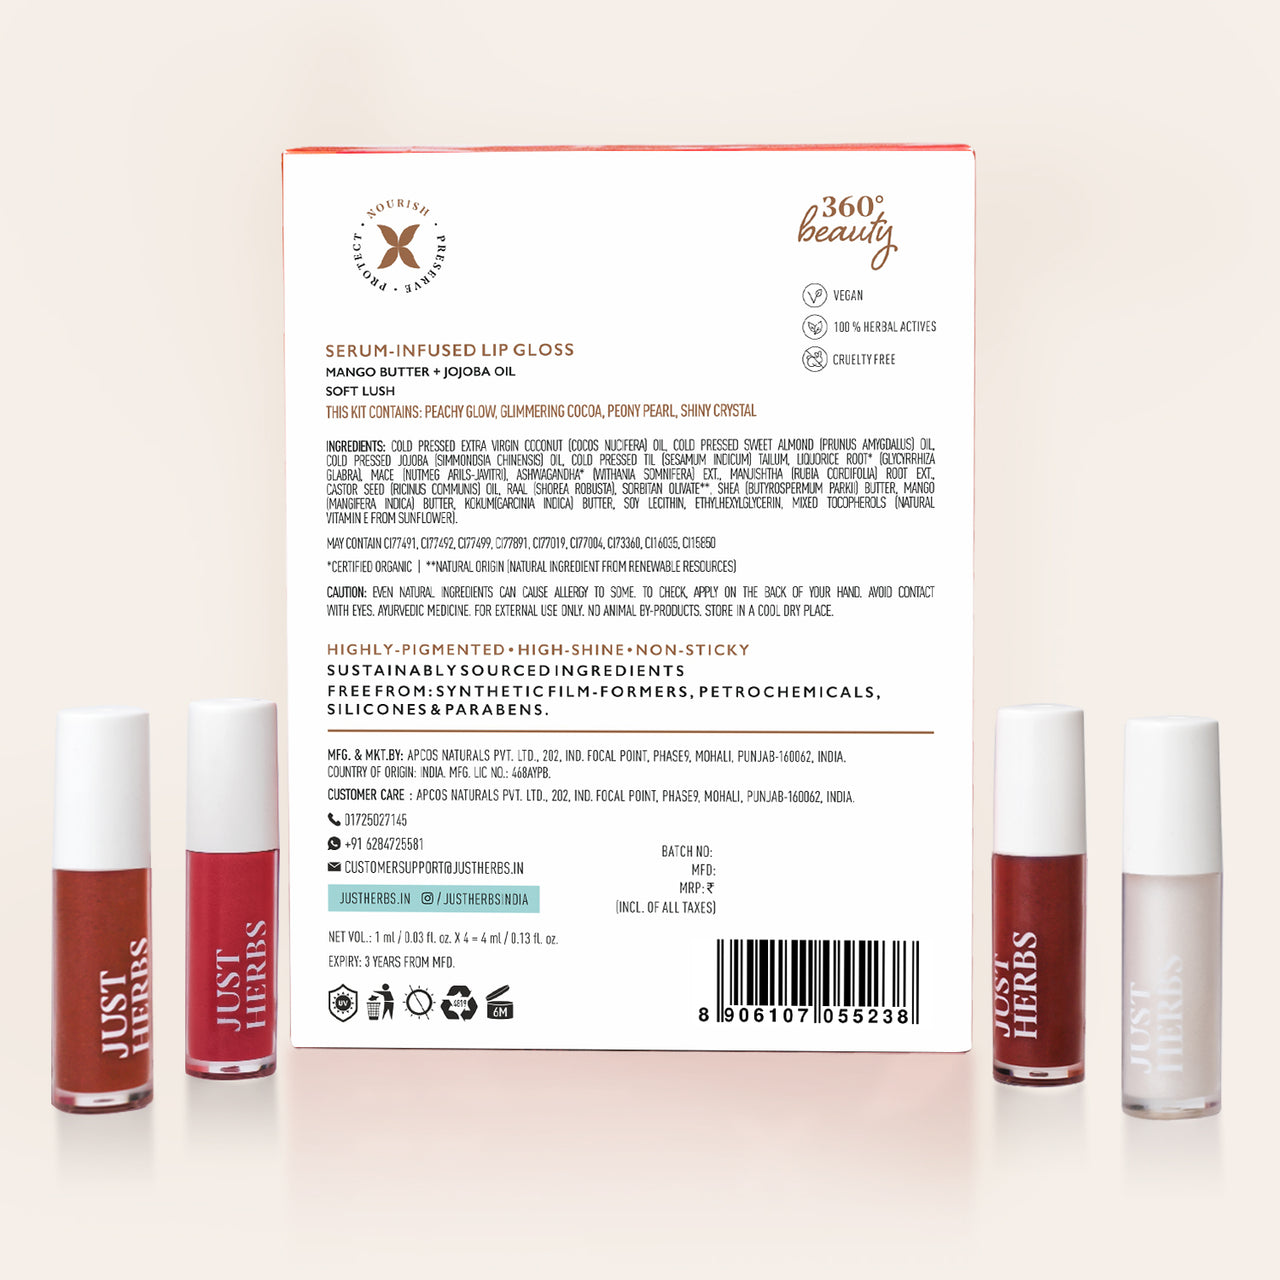 Serum-Infused Lip Gloss - Soft Lush - 4 g